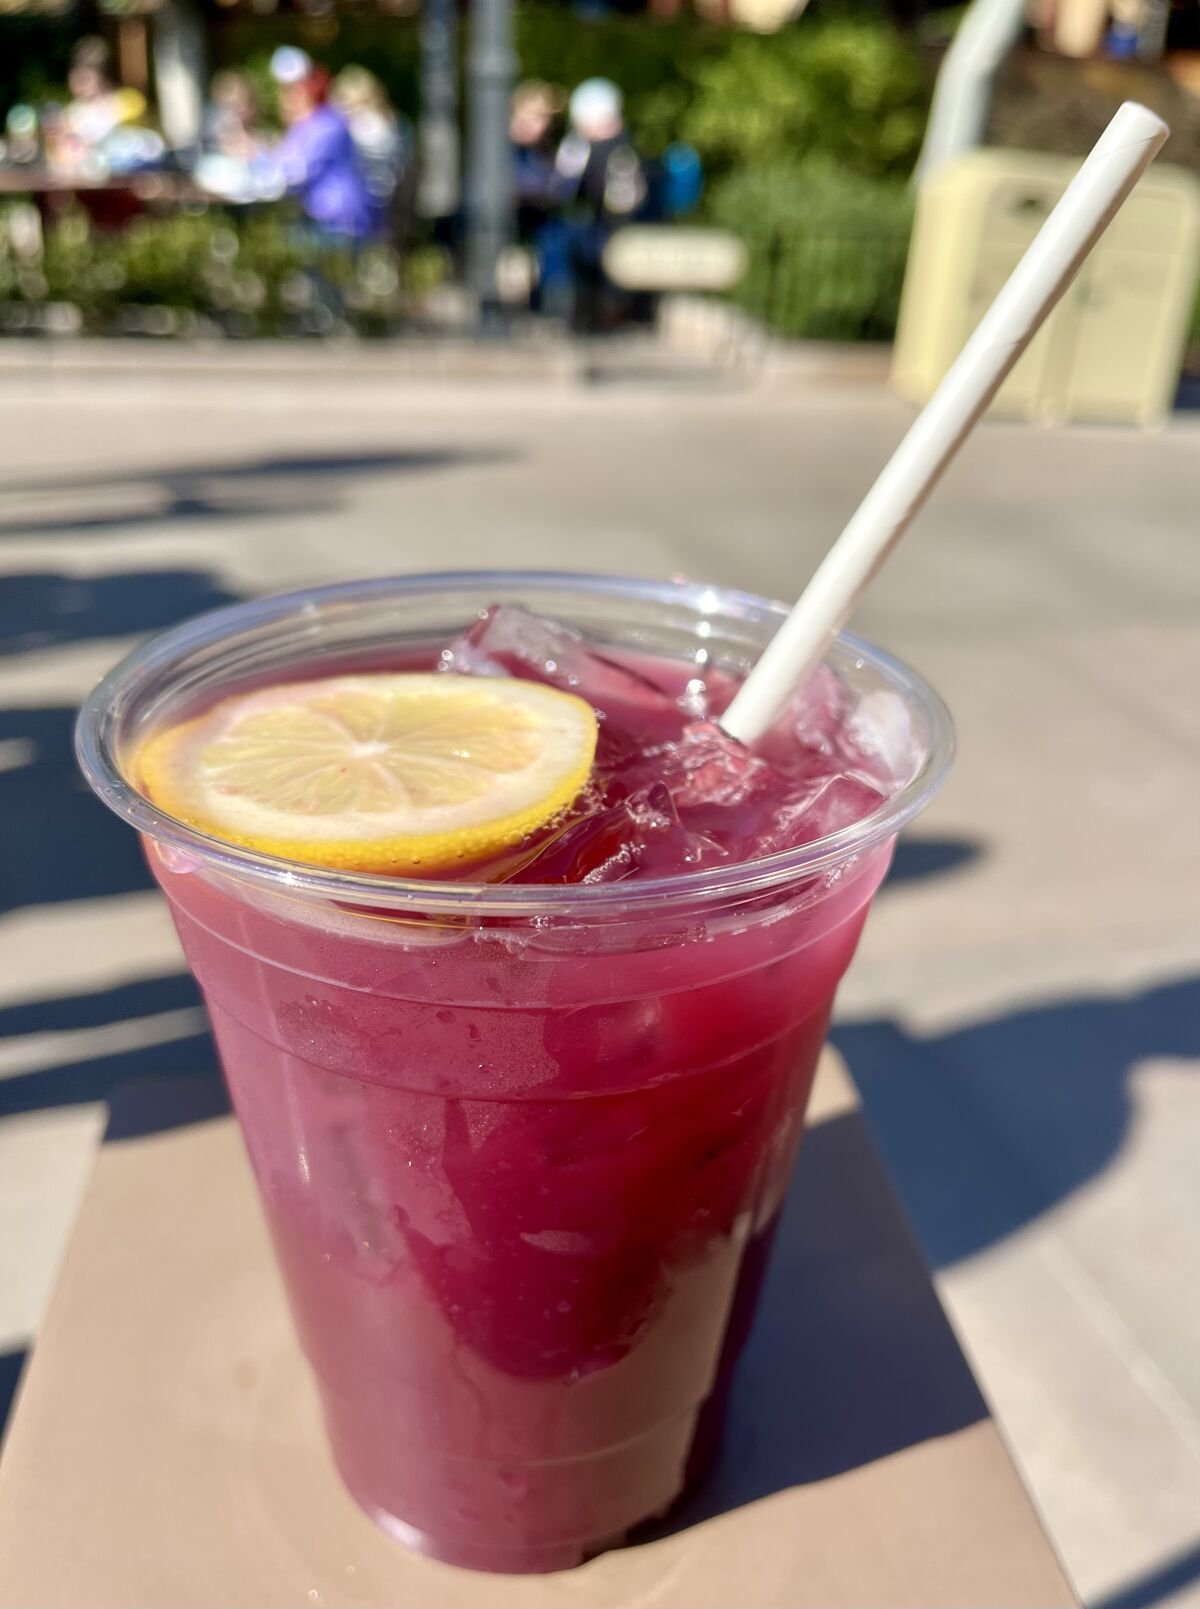 Blackberry-lavender lemonade from Avocado Time at Disney California Adventure.